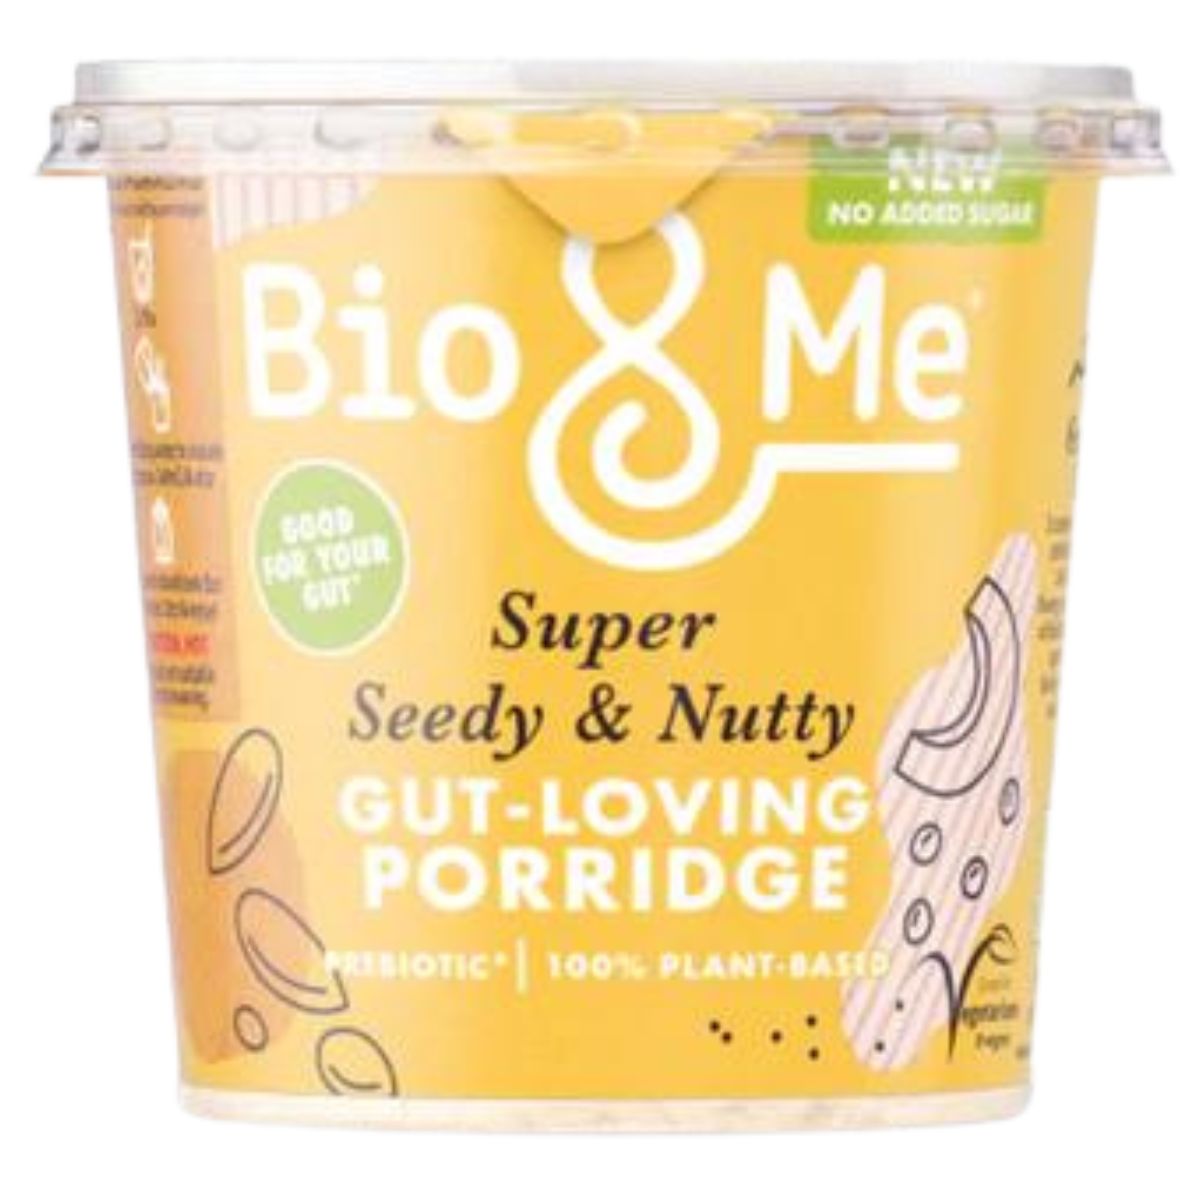 Bio & Me Super Seedy & Nutty Porridge Pot - 58g